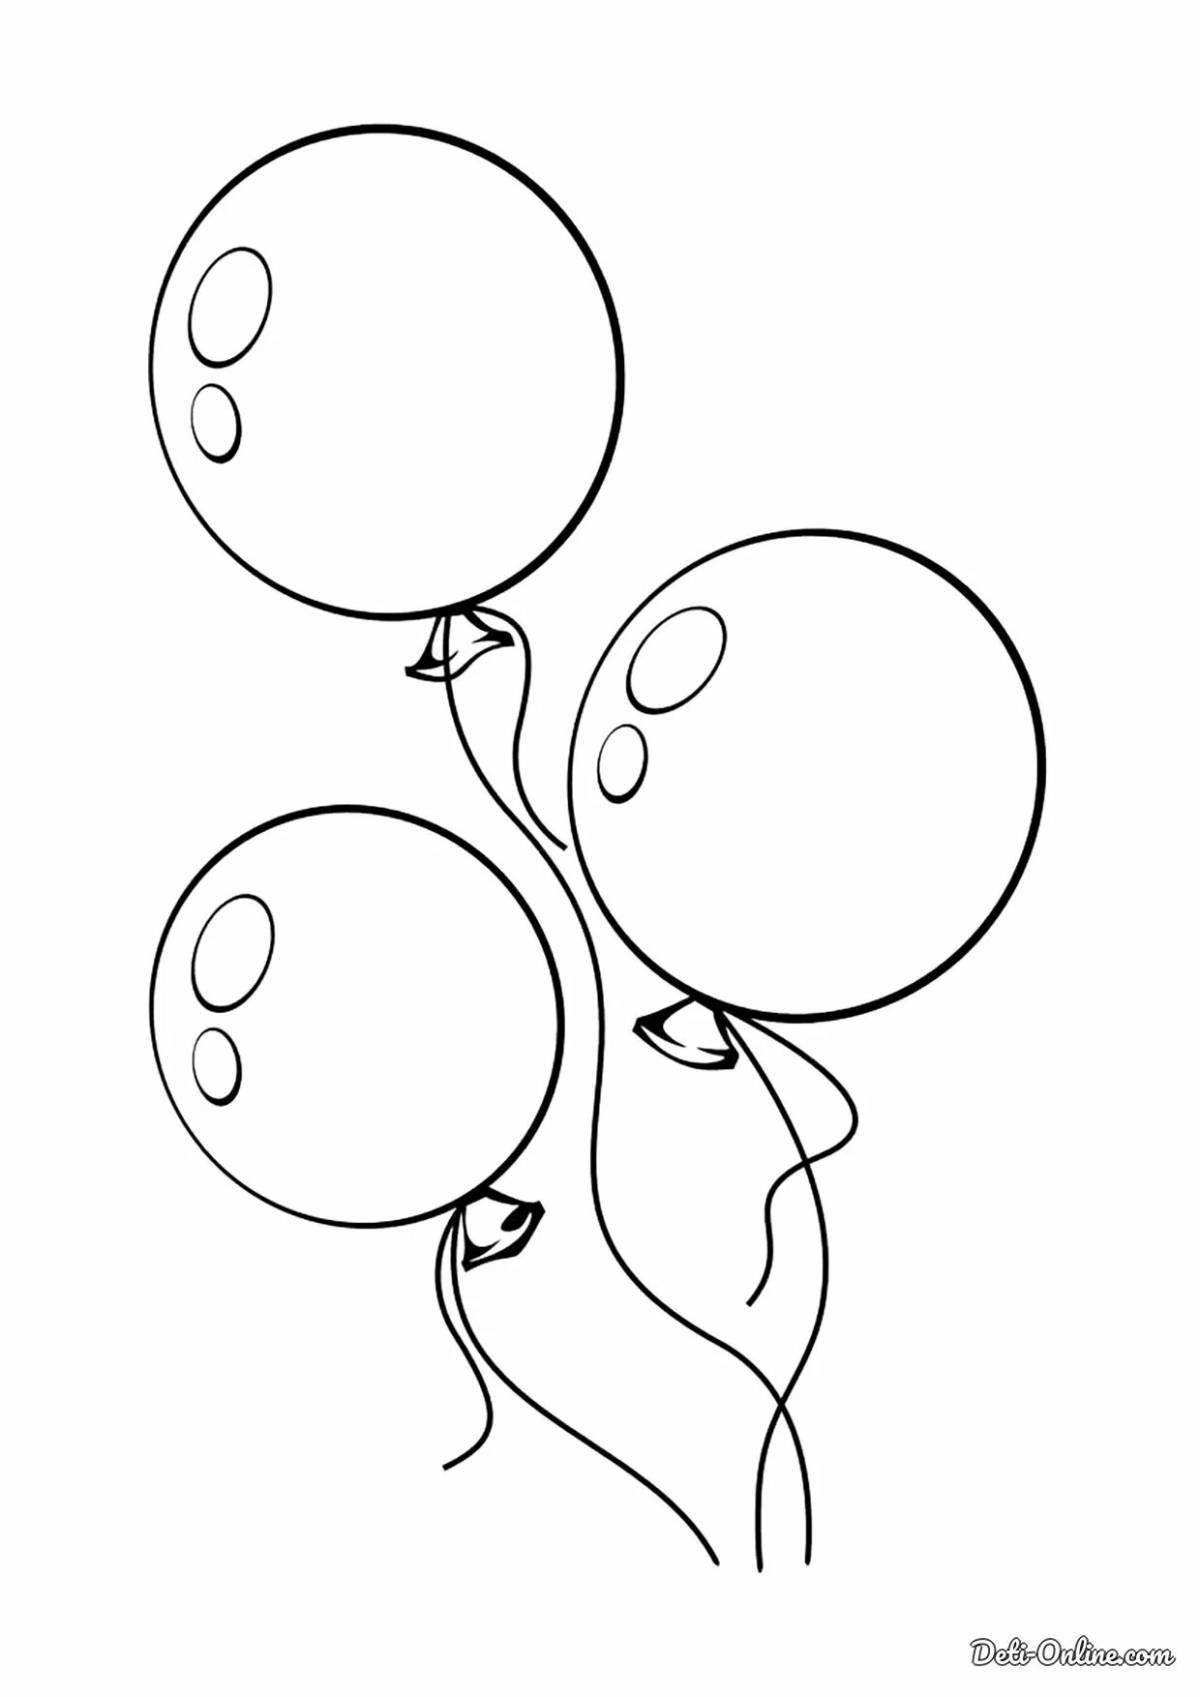 Adorable balloon coloring page